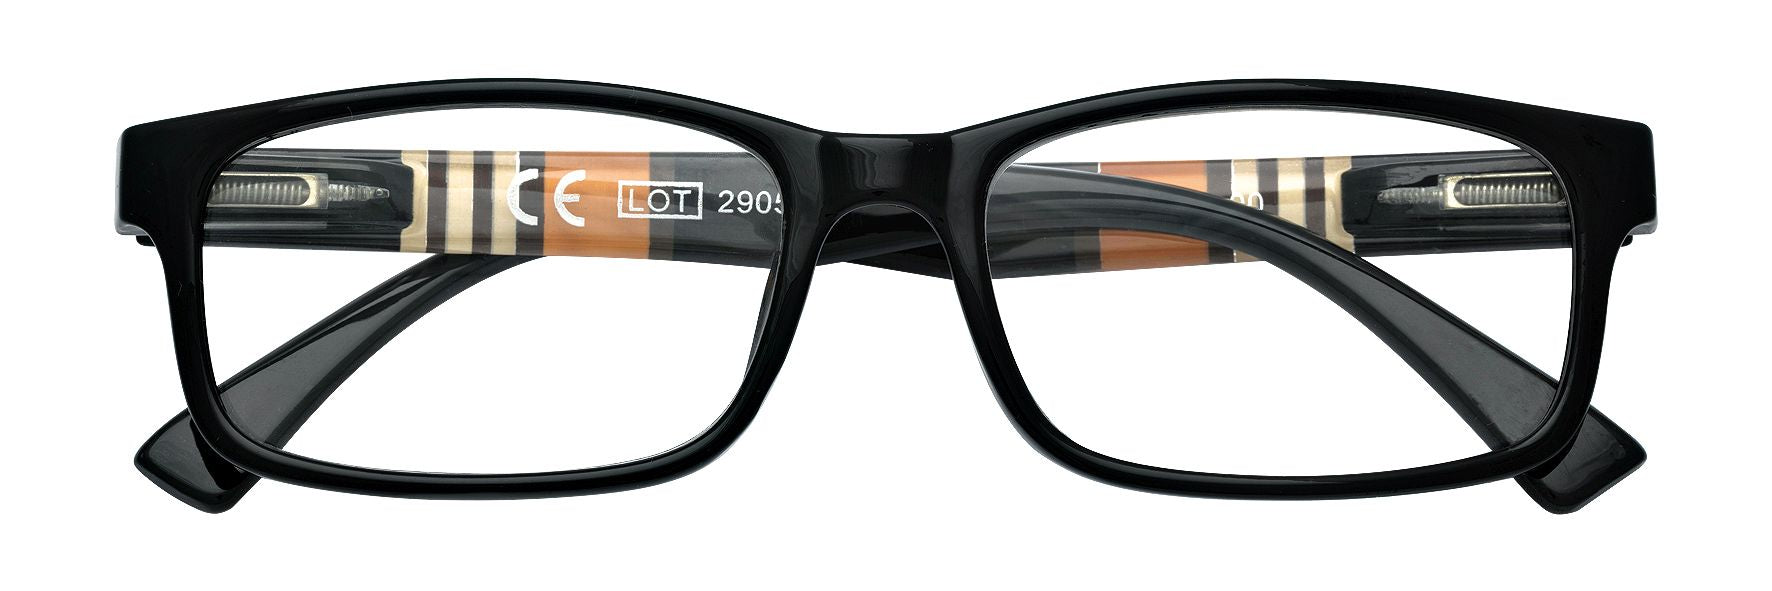 ZIPPO occhiali da lettura +1.00 31Z-B25-BLK100